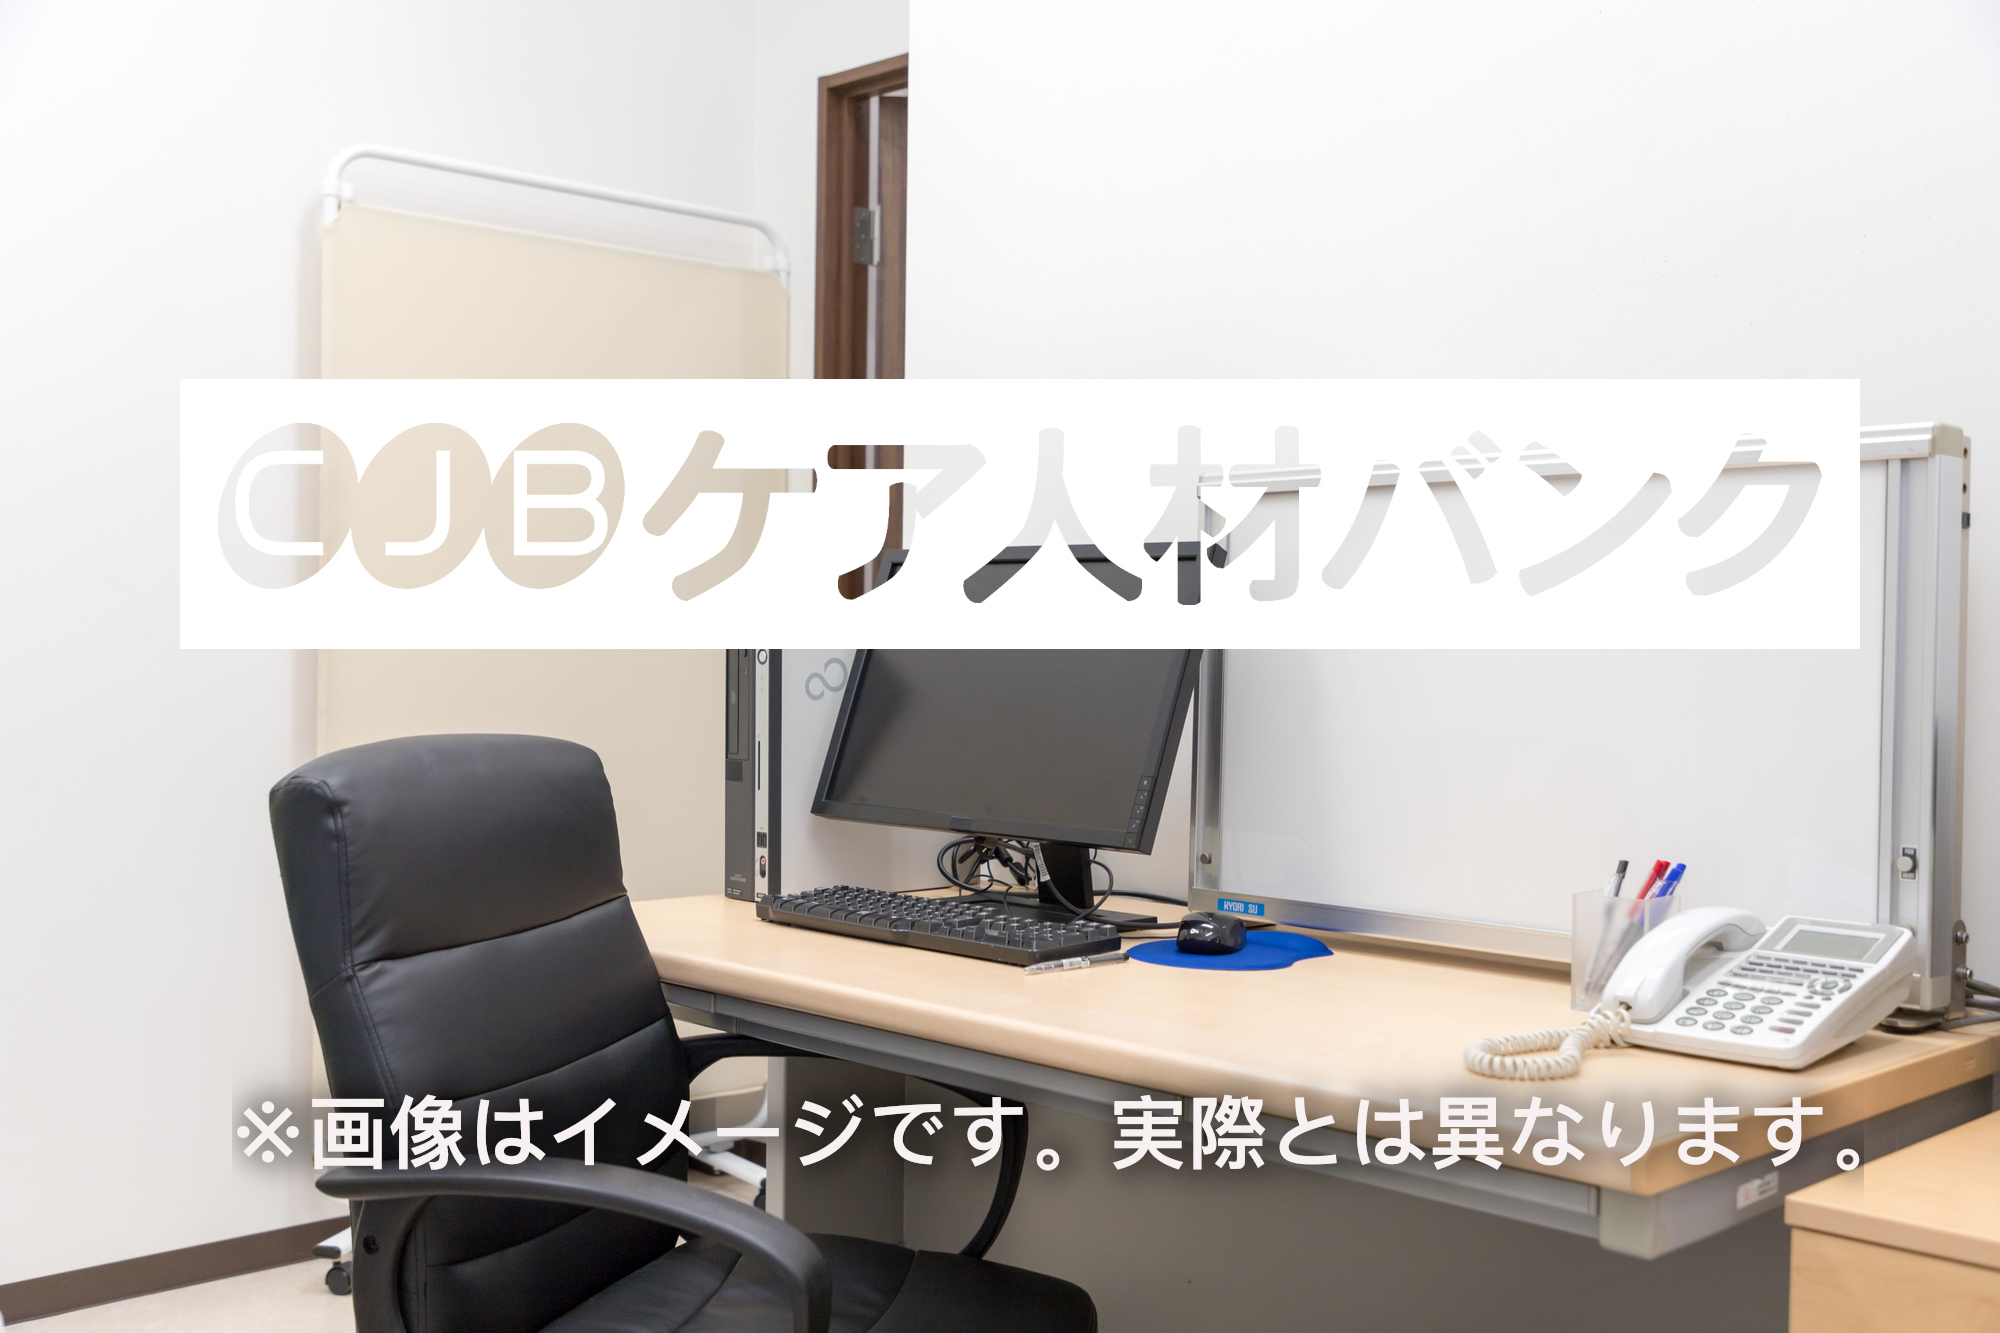 京都民医連太子道診療所 のイメージ画像